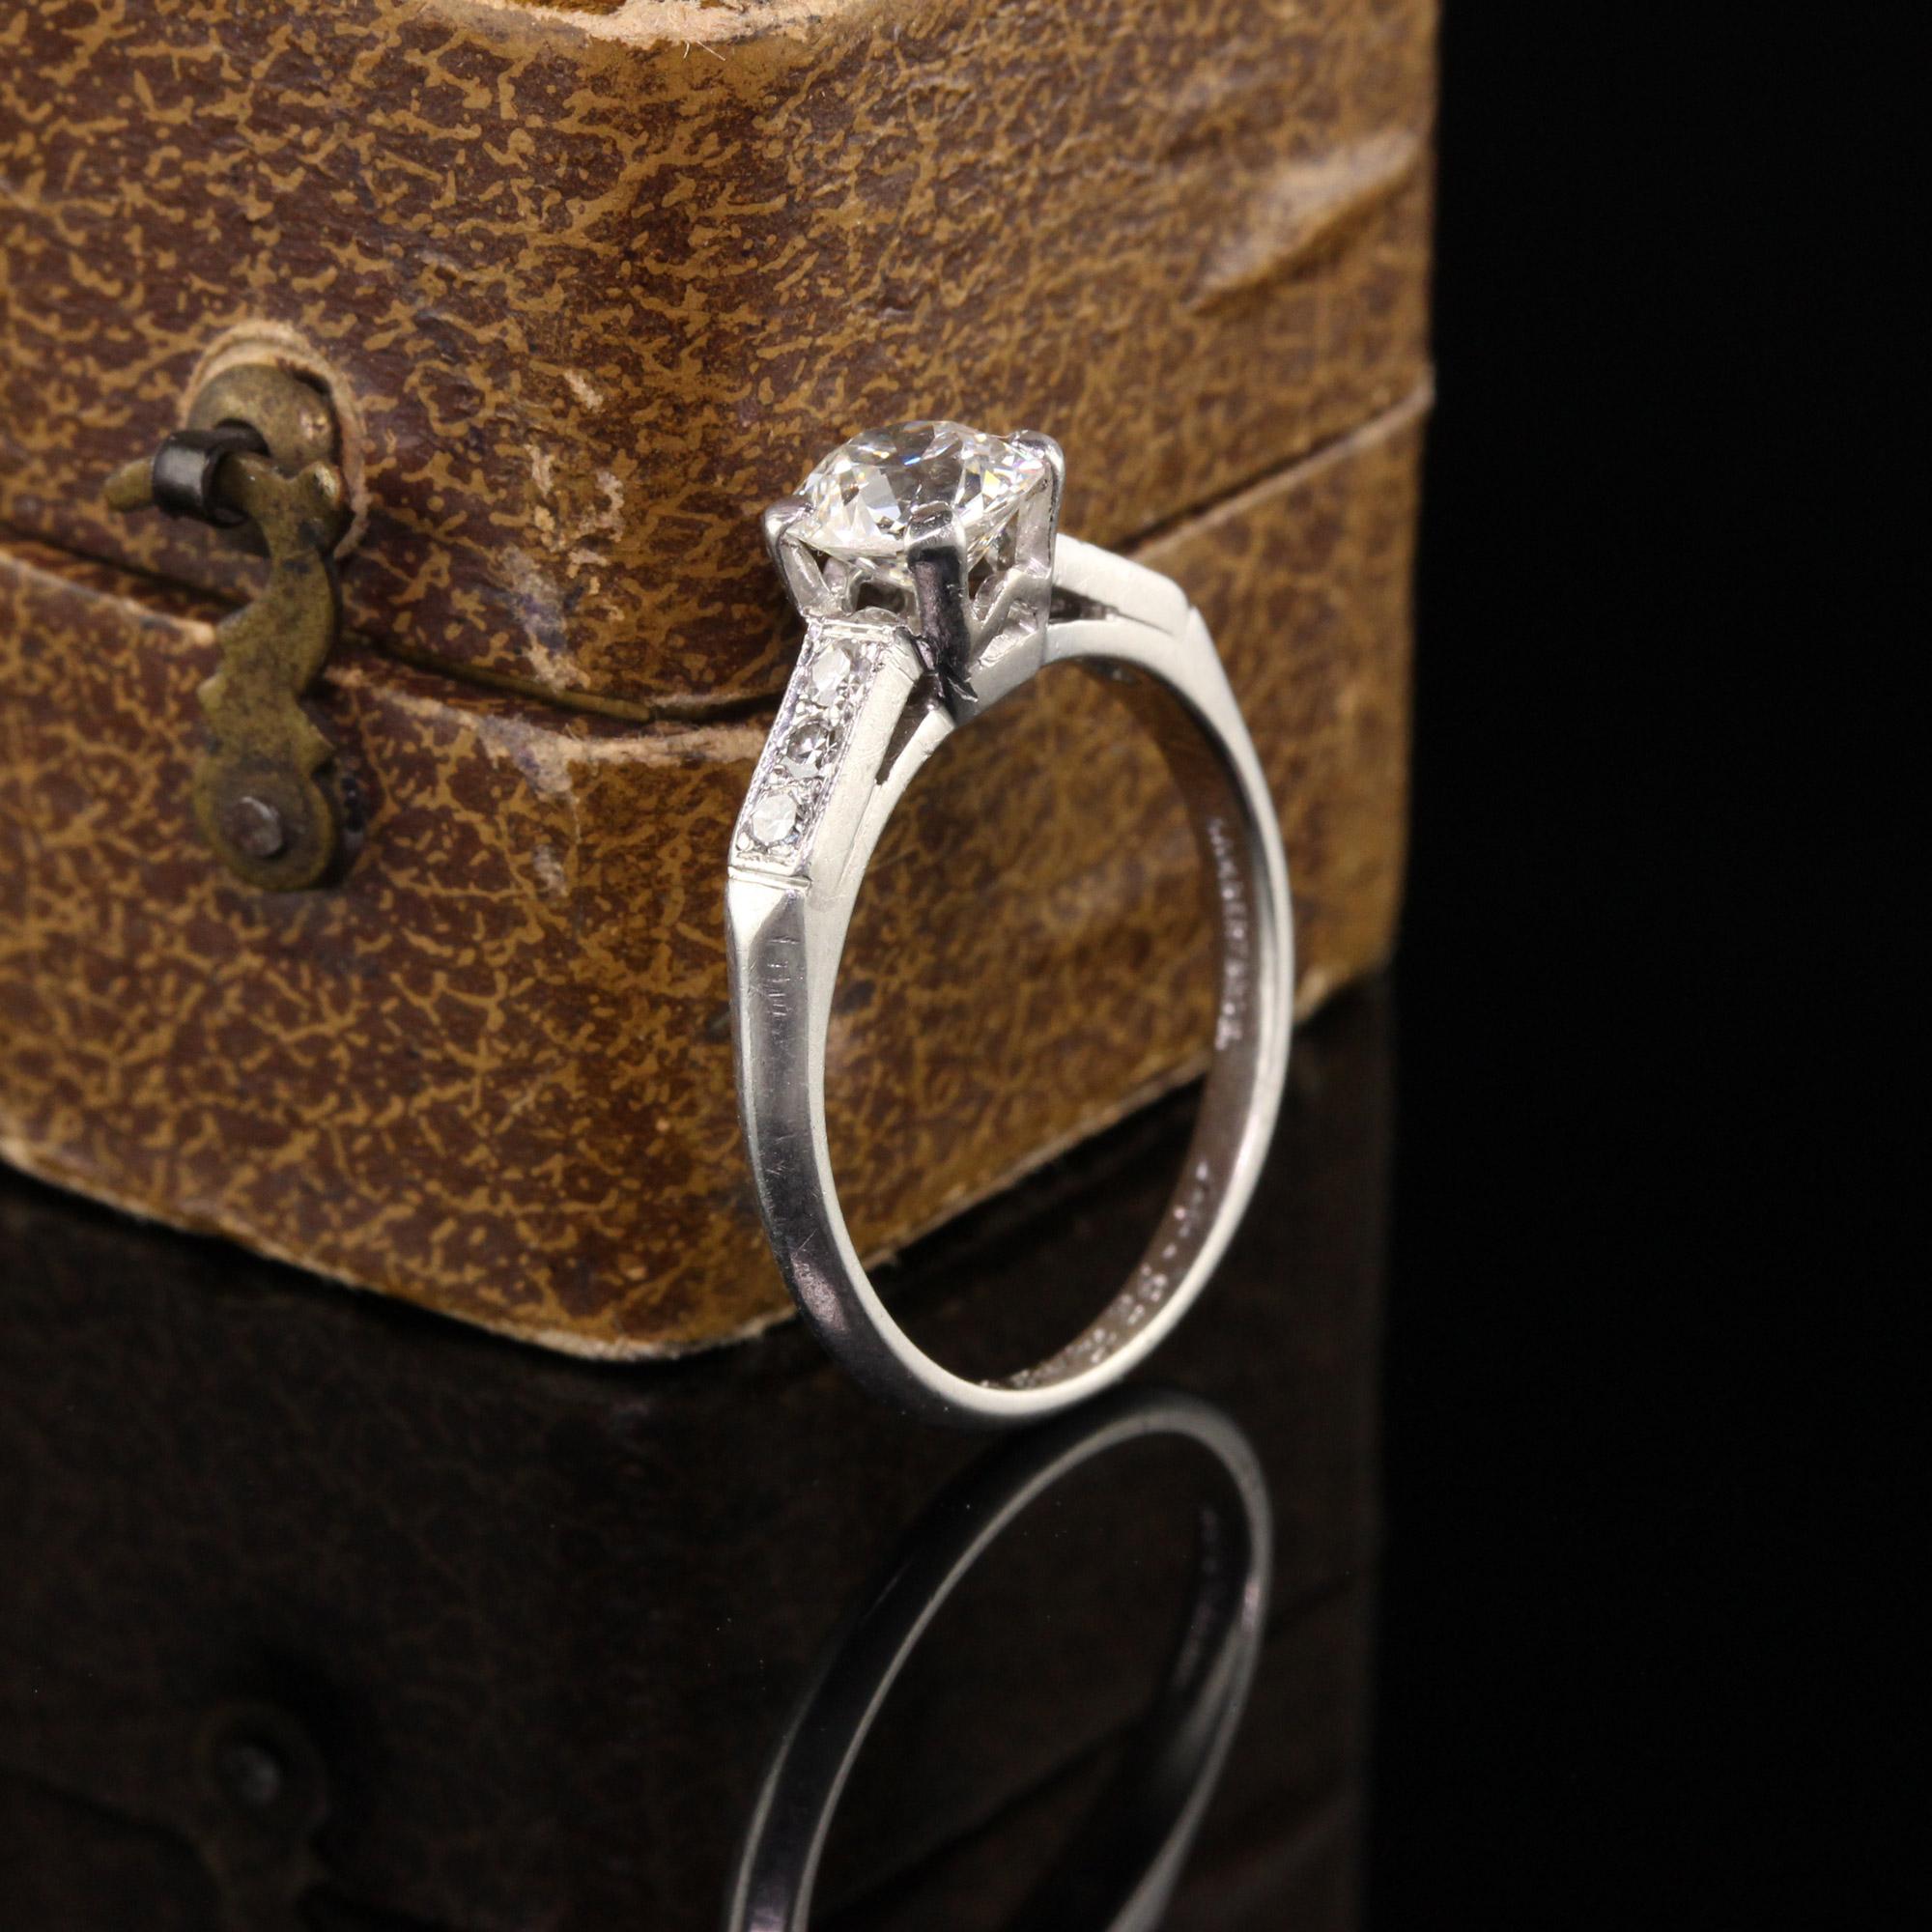 Classic Antique Art Deco Lambert Bros Platinum Old Mine Diamond Engagement Ring. This gorgeous engagement ring has a .65 ct old mine cut diamond in the center of a beautiful Lambert Bros art deco mounting with single cut diamond accents.

Item